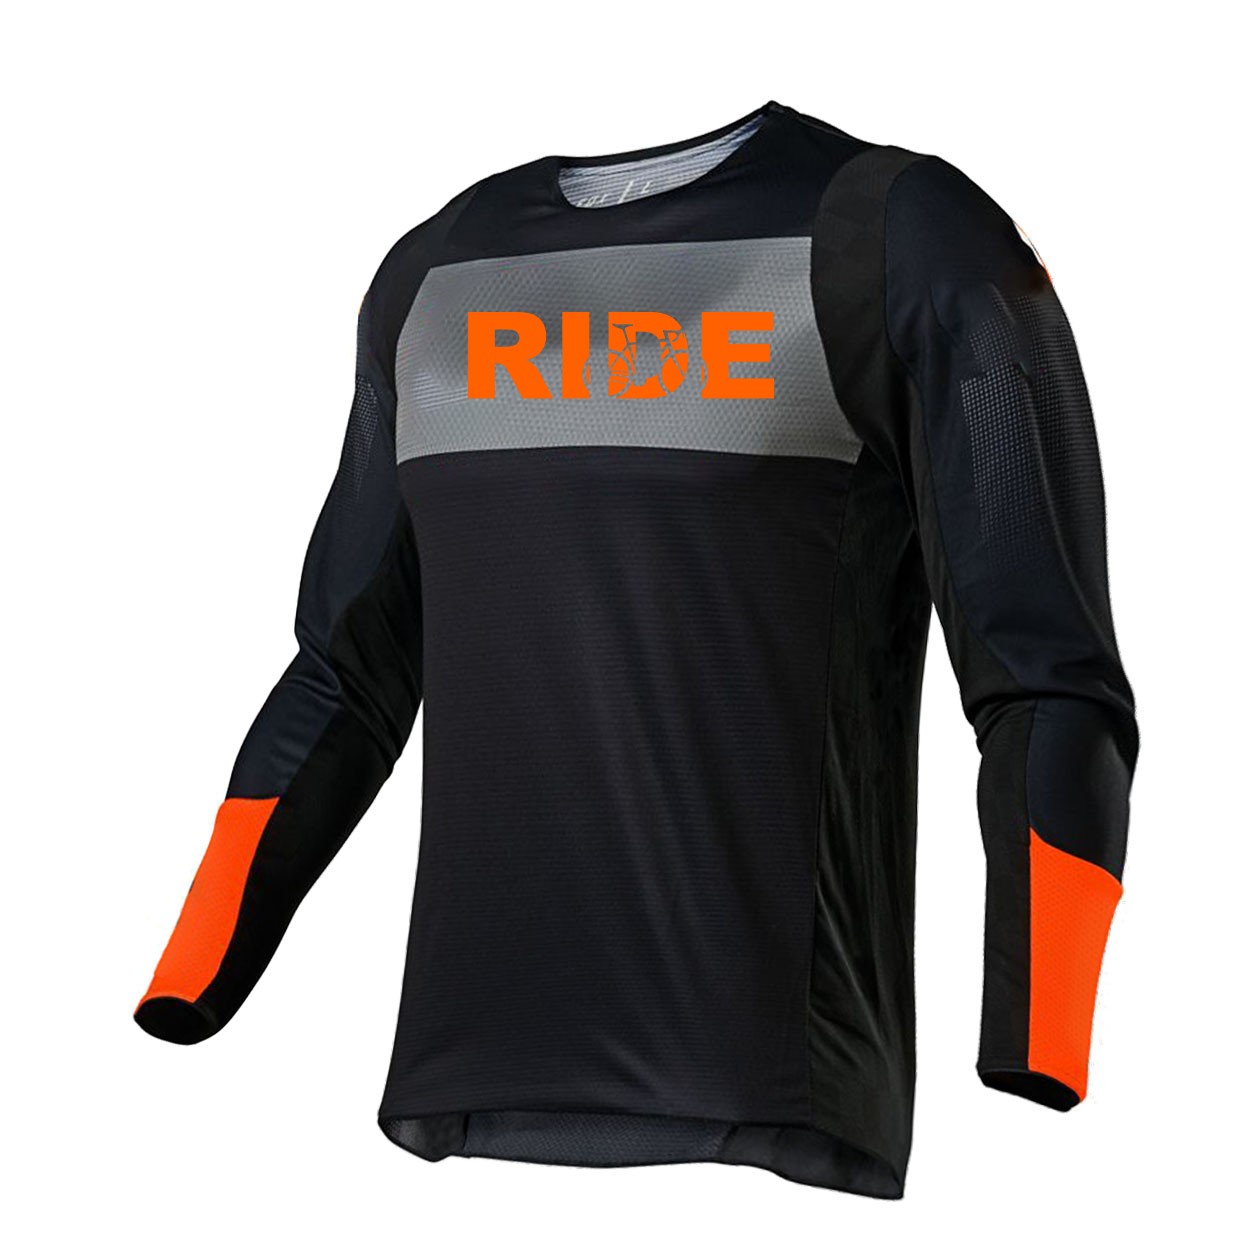 Ride Cycle Logo Classic Performance Jersey Long Sleeve Shirt Black/Gray/Orange (Orange Logo)